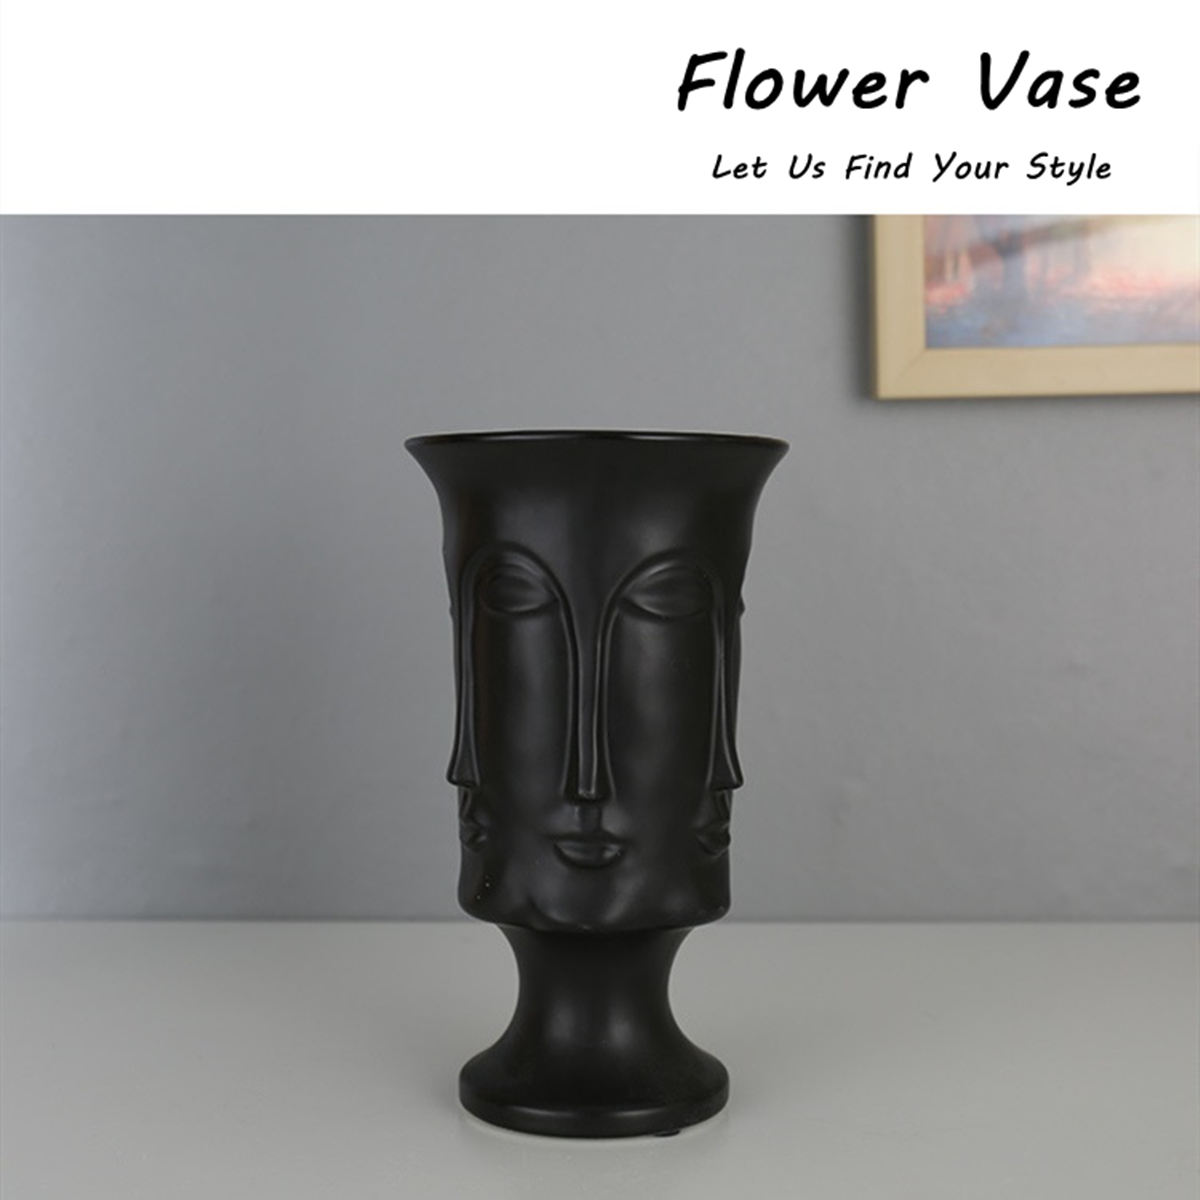 Minimalist-Artificial-Flower-Ceramic-Human-Face-Creative-Vase-Display-Room-Decorations-1473220-1